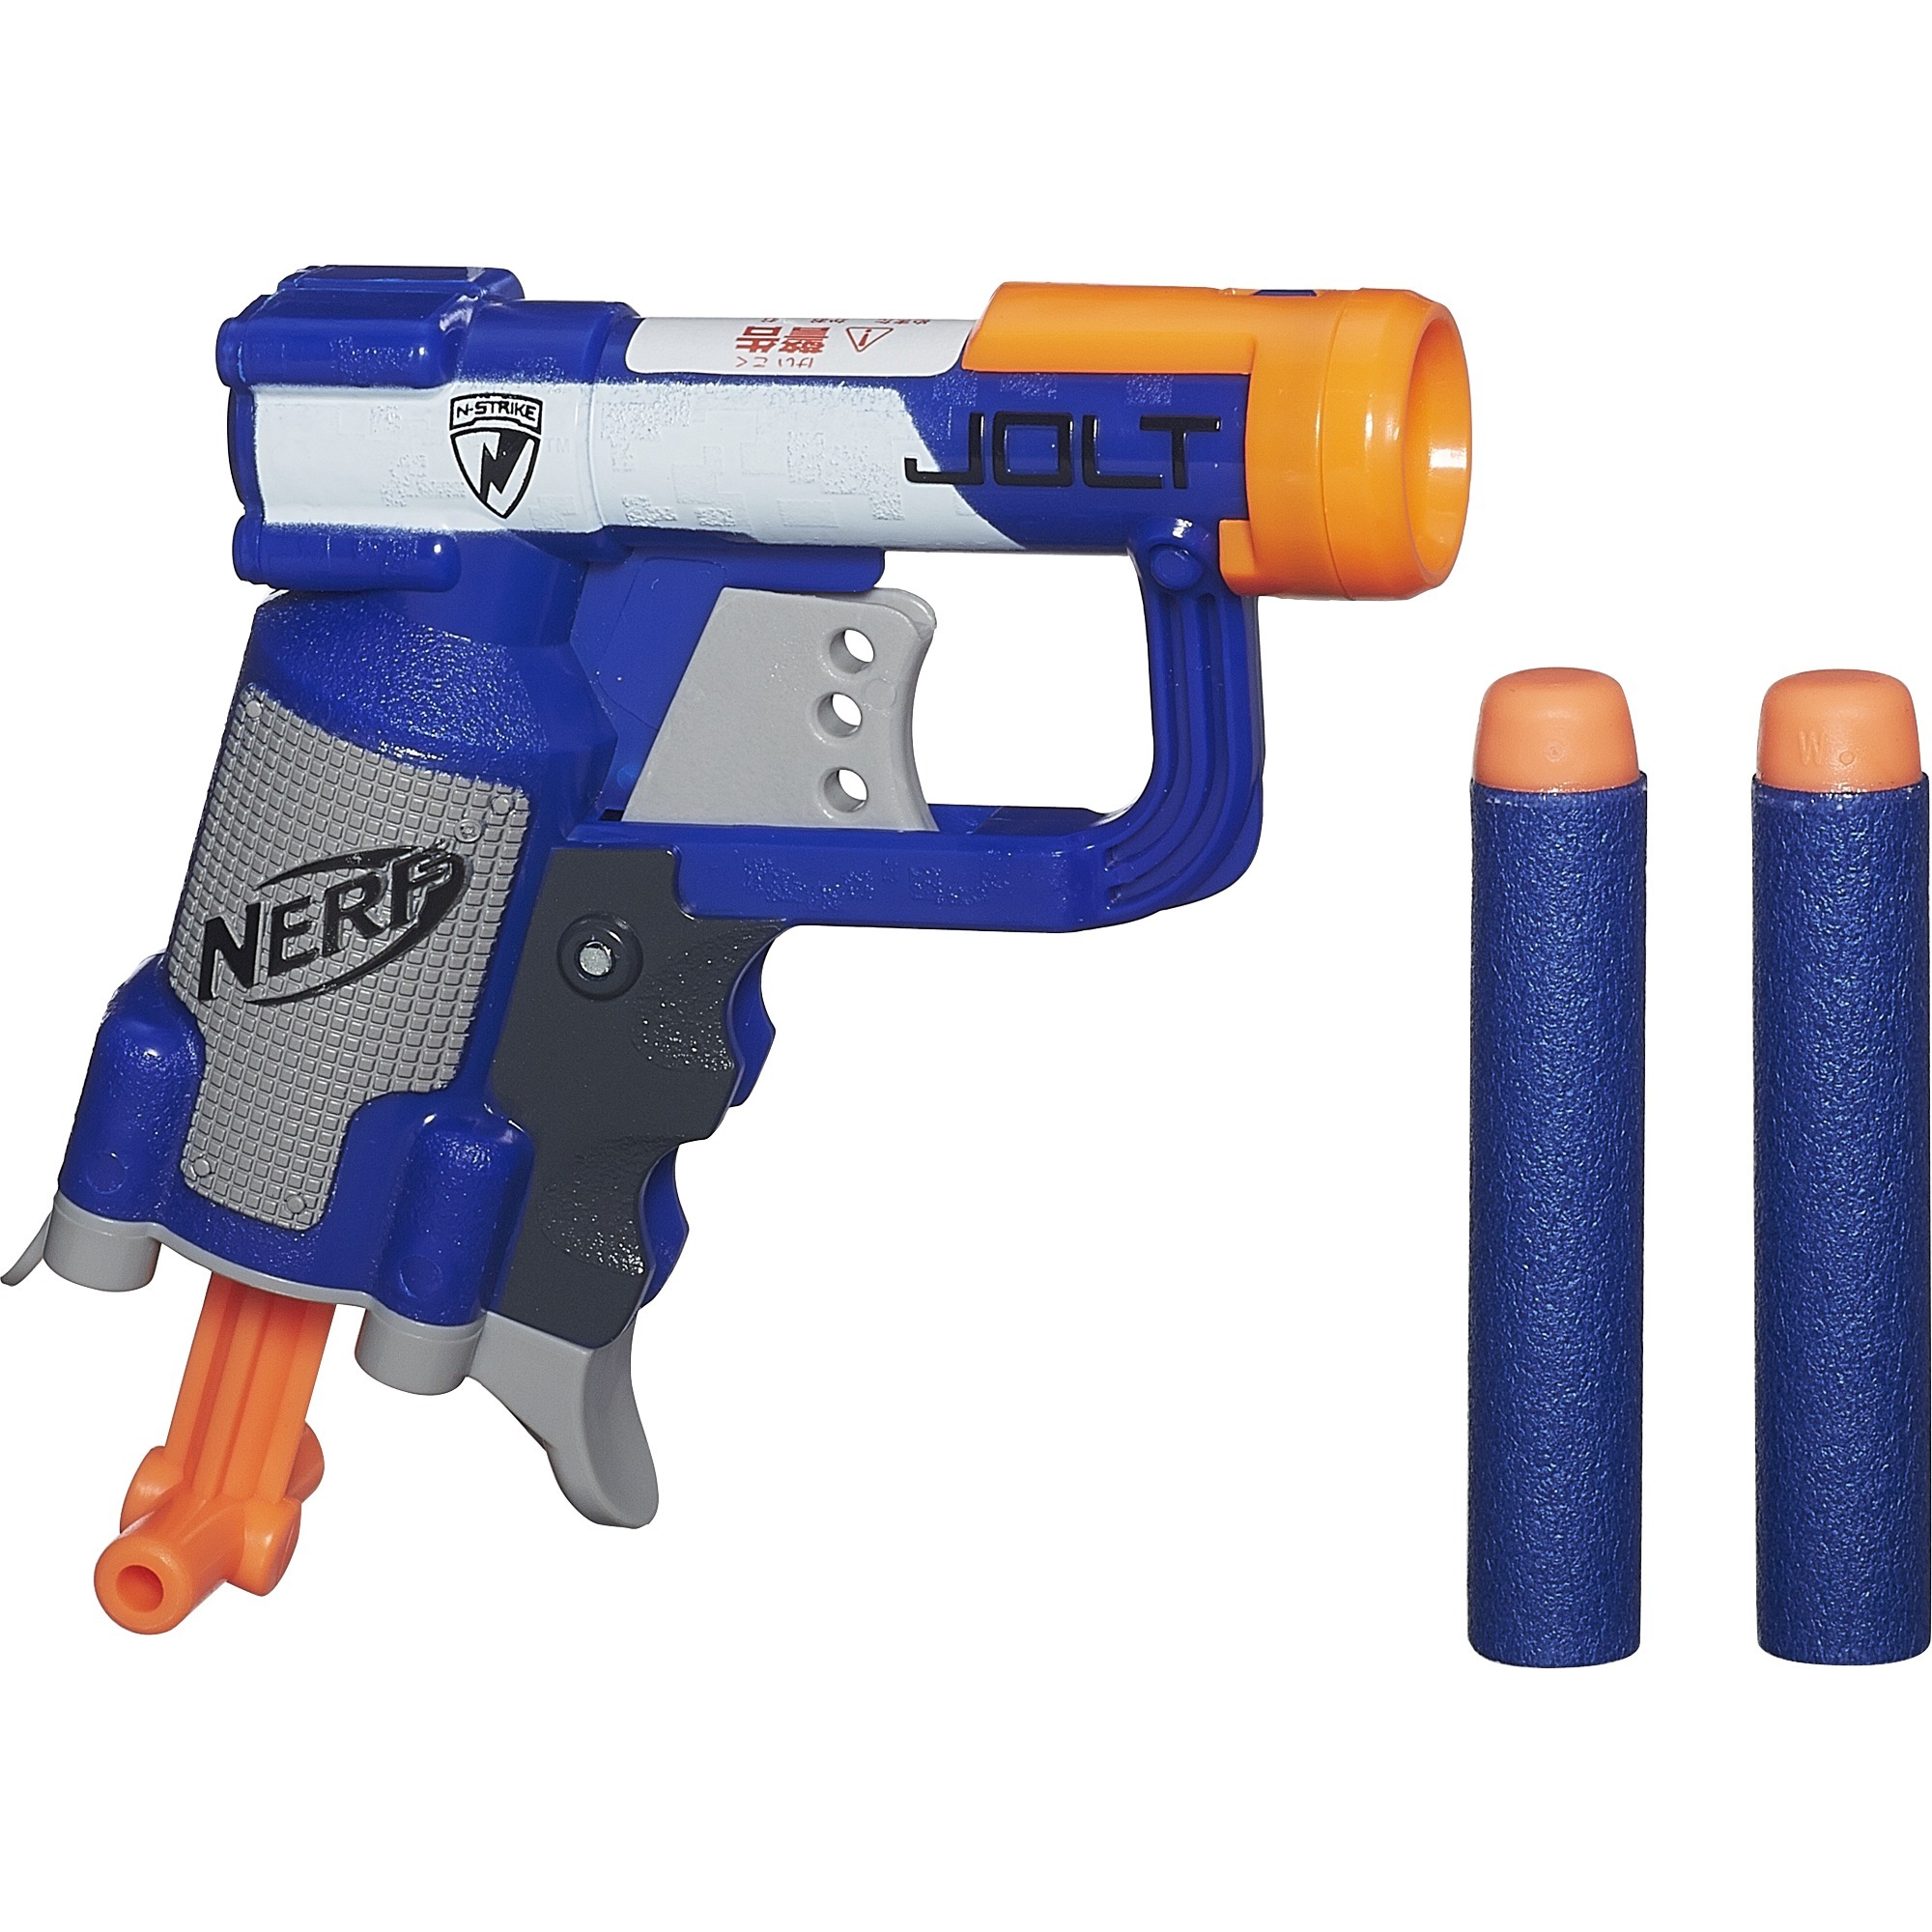 A0707EU6 broń zabawkowa Zabawka karabin szturmowy, Pistolet NERF